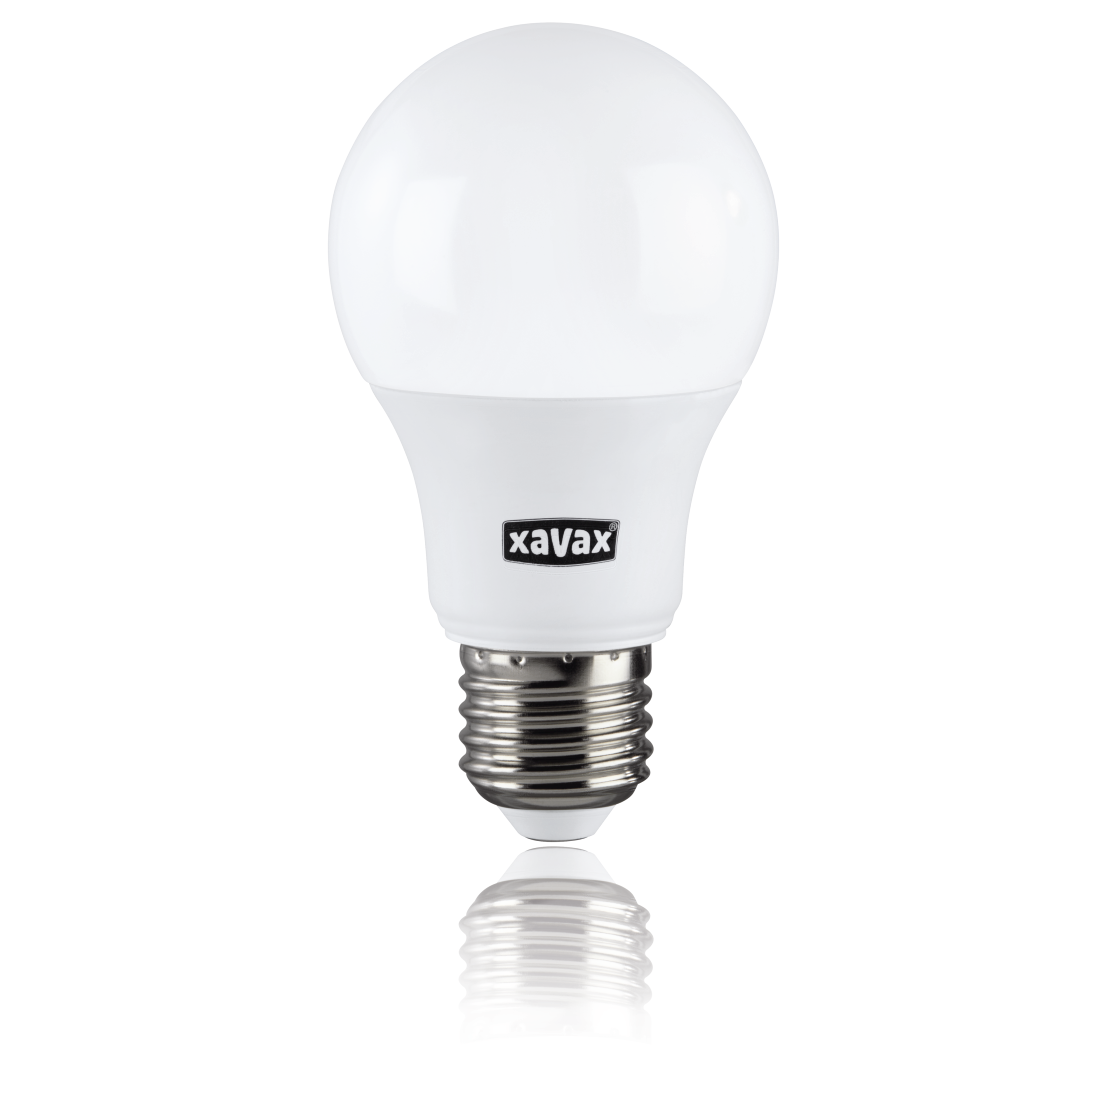 abx2 Druckfähige Abbildung 2 - Xavax, LED-Lampe, E27, 470lm ersetzt 40W, Glühlampe, Warmweiß, dimmbar